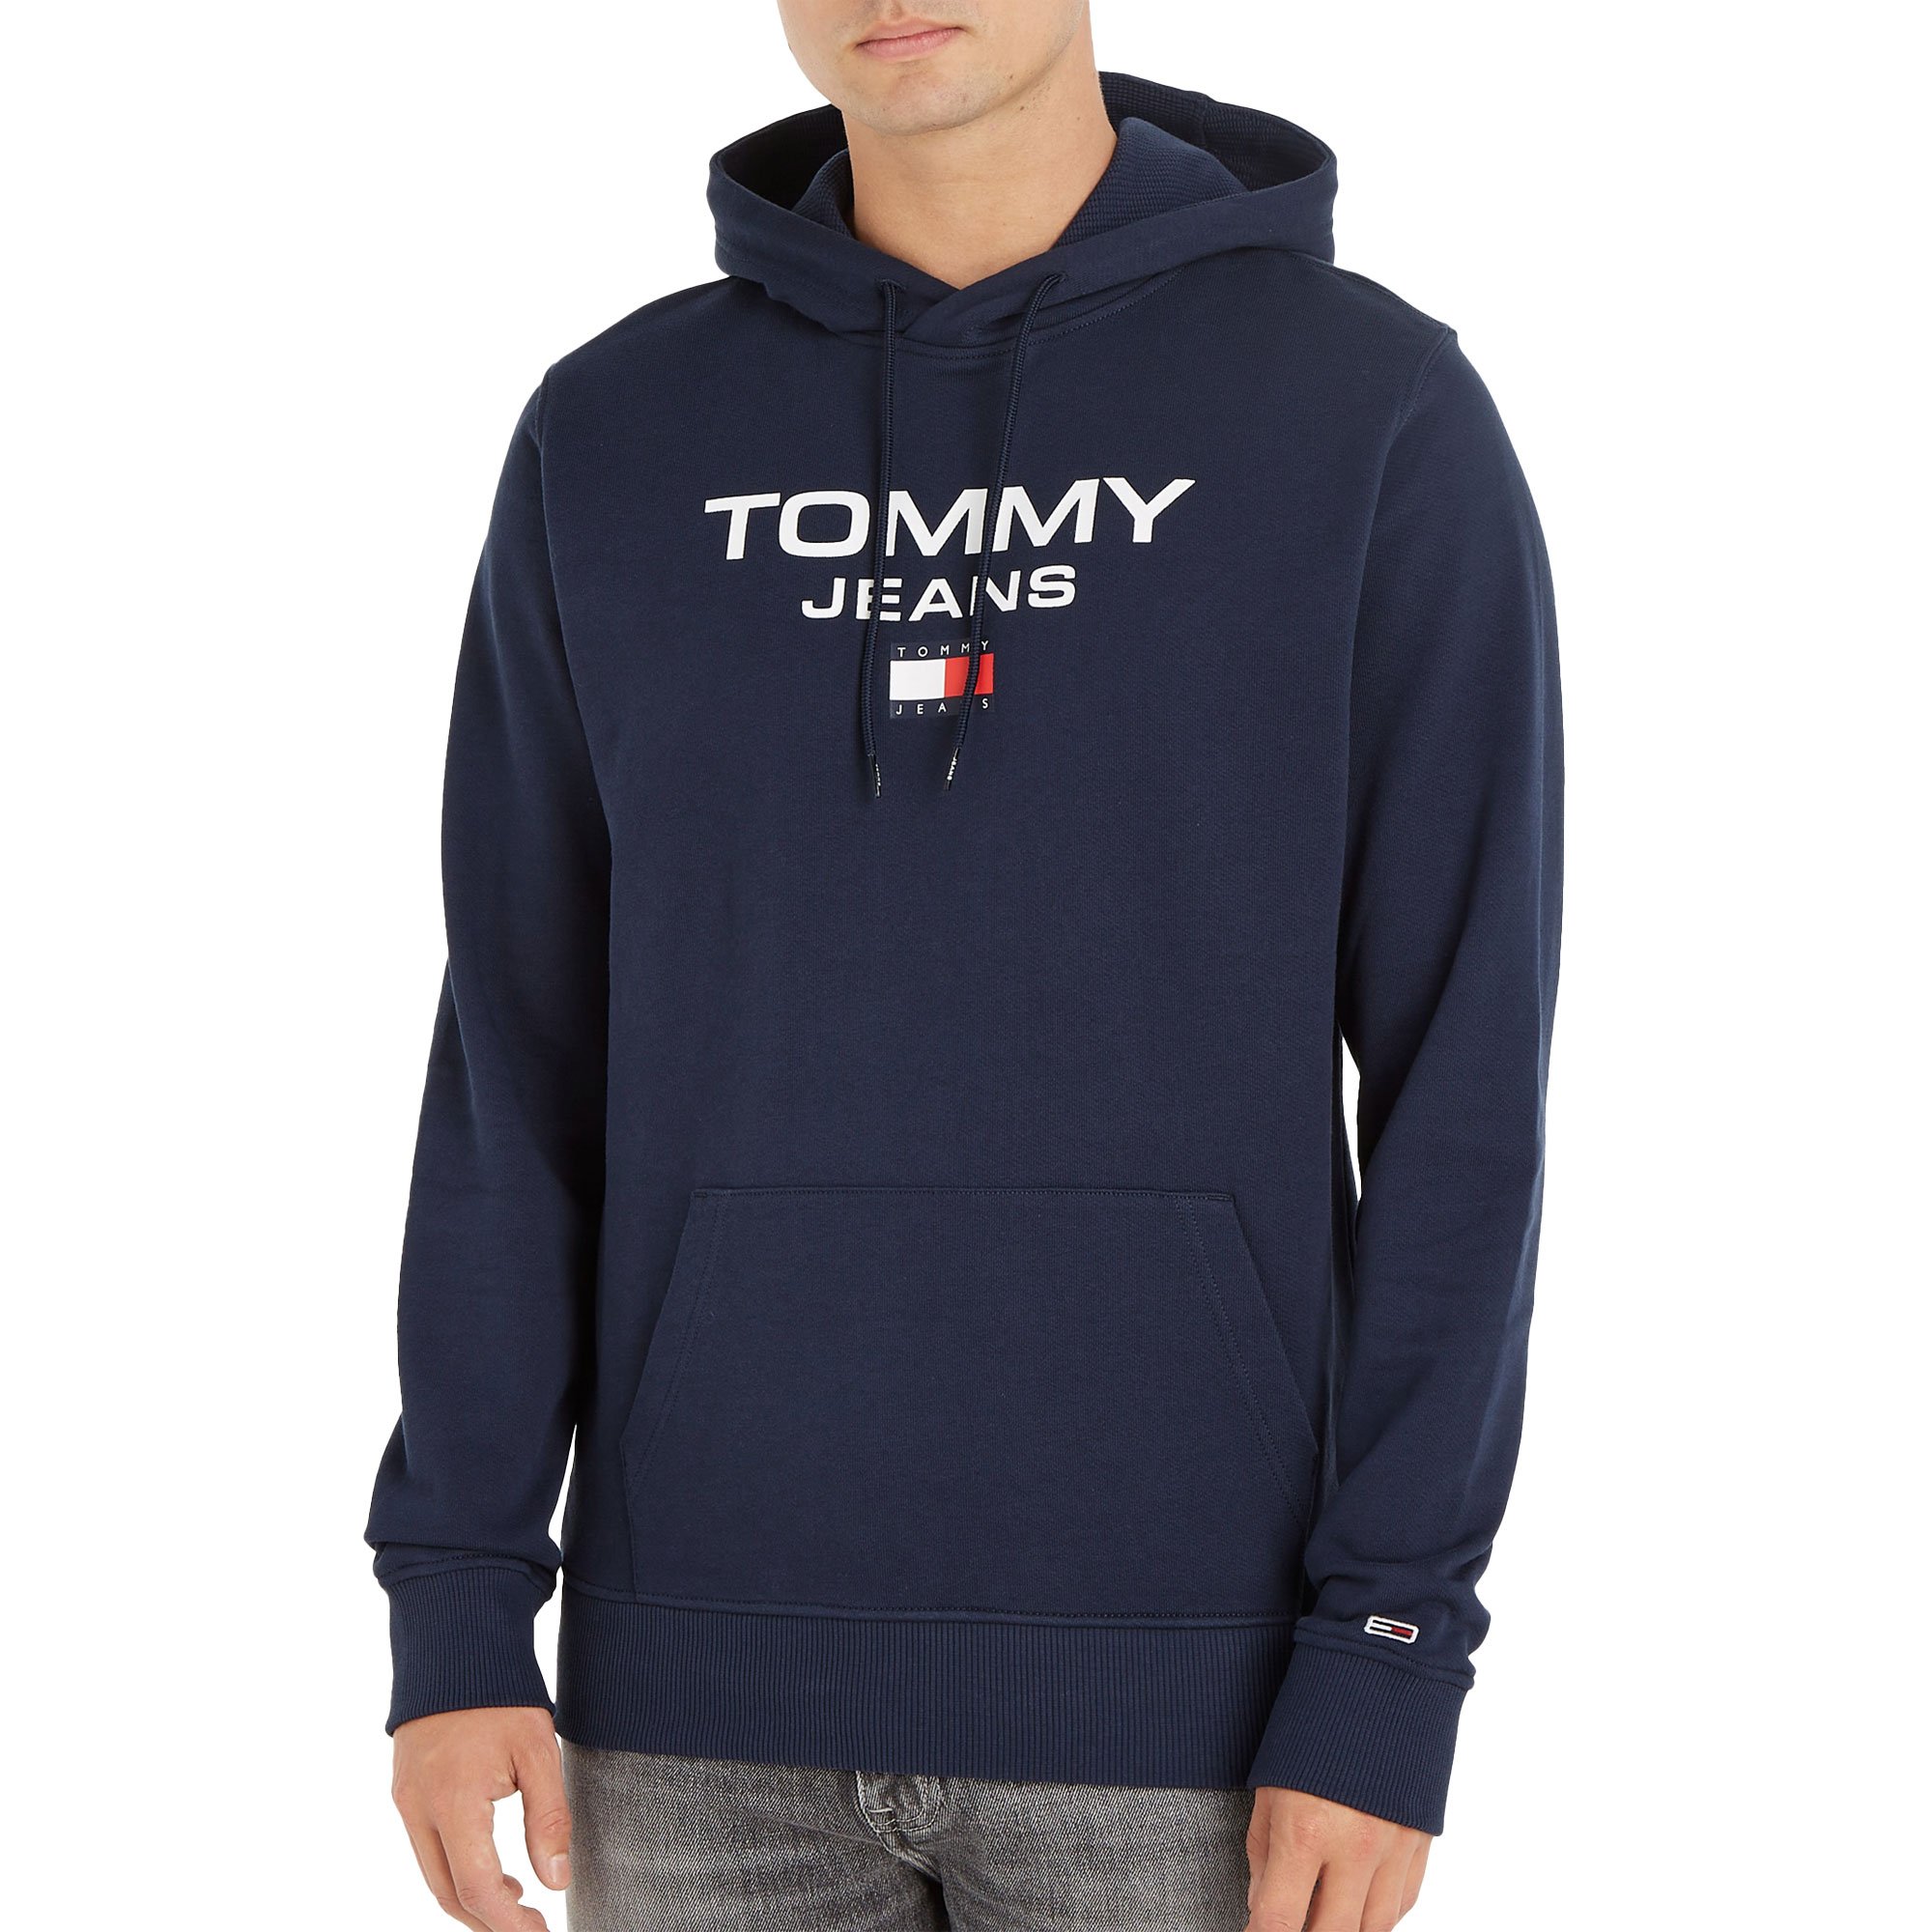 Tommy Jeans Herren ENTRY dunkelblau navy TJM twilight HOODIE REG XL Kapuzensweatshirt